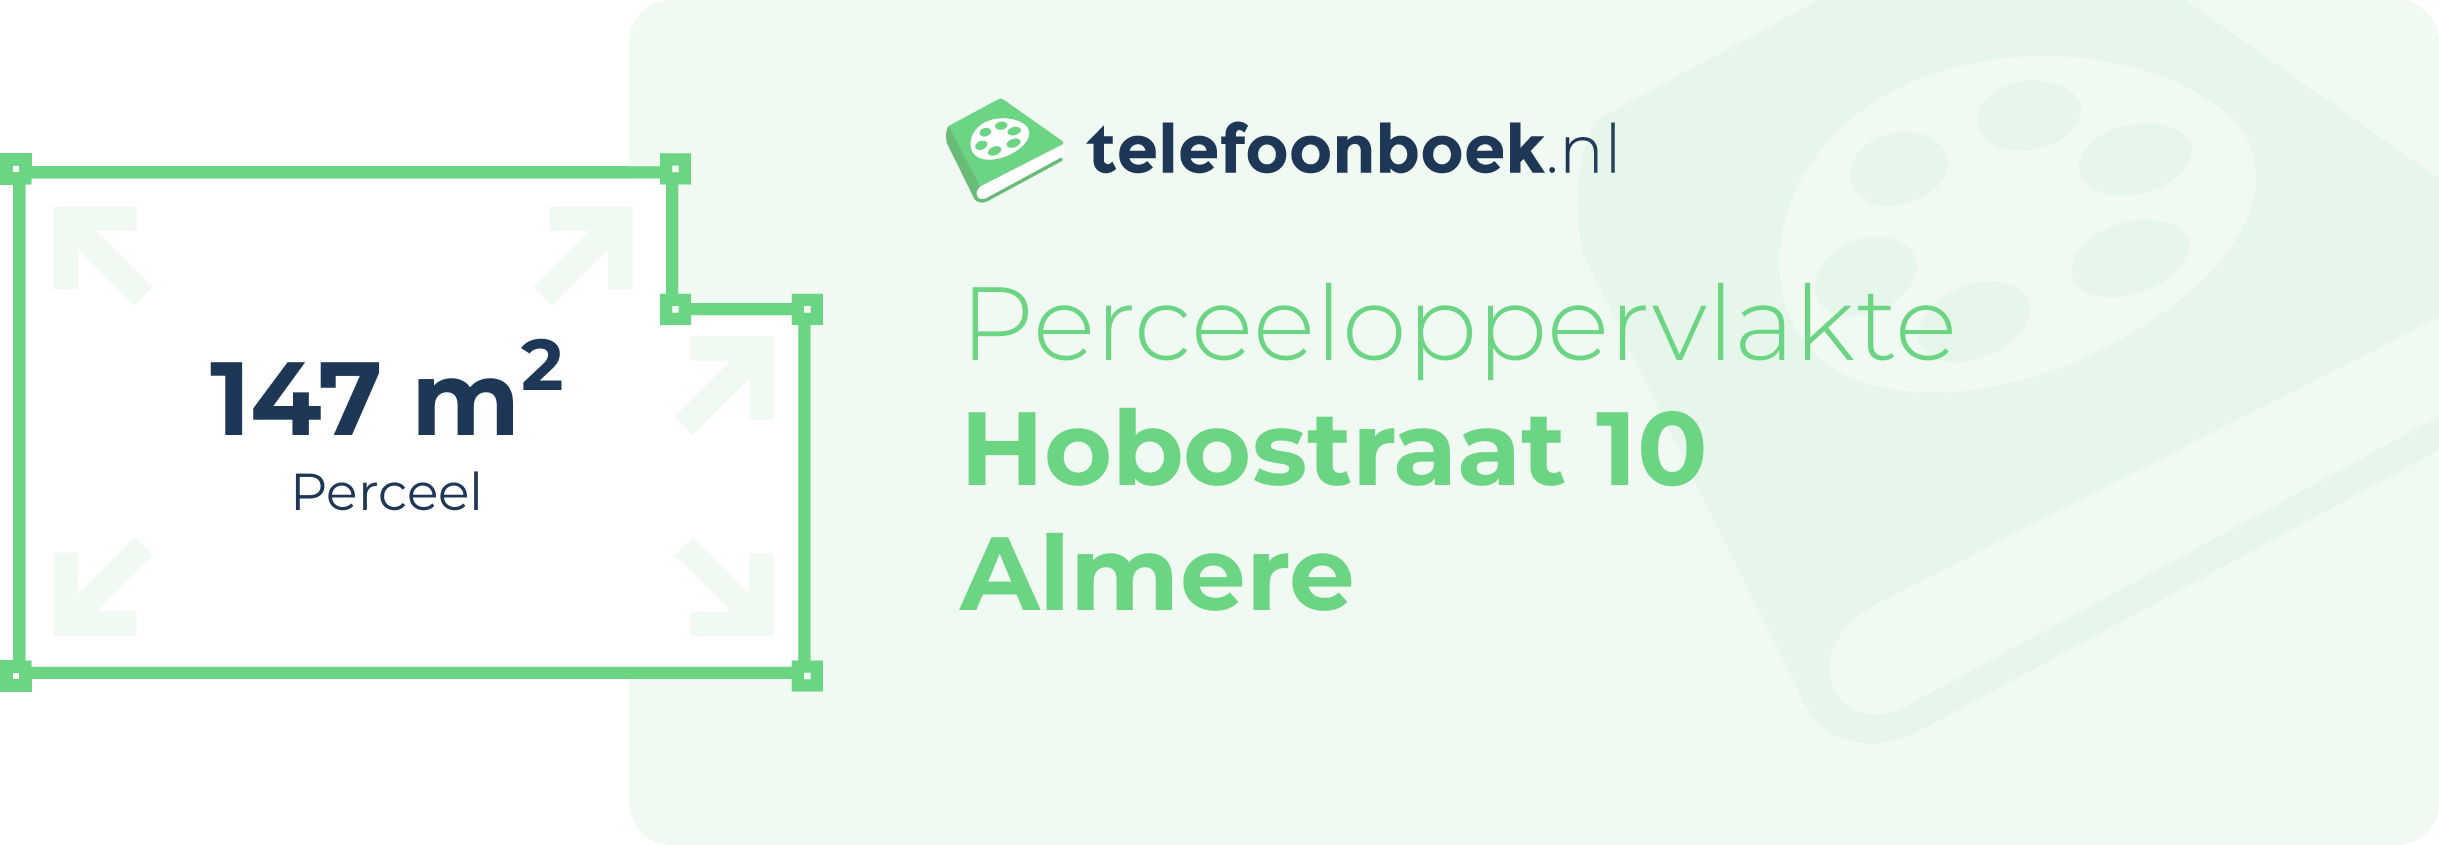 Perceeloppervlakte Hobostraat 10 Almere